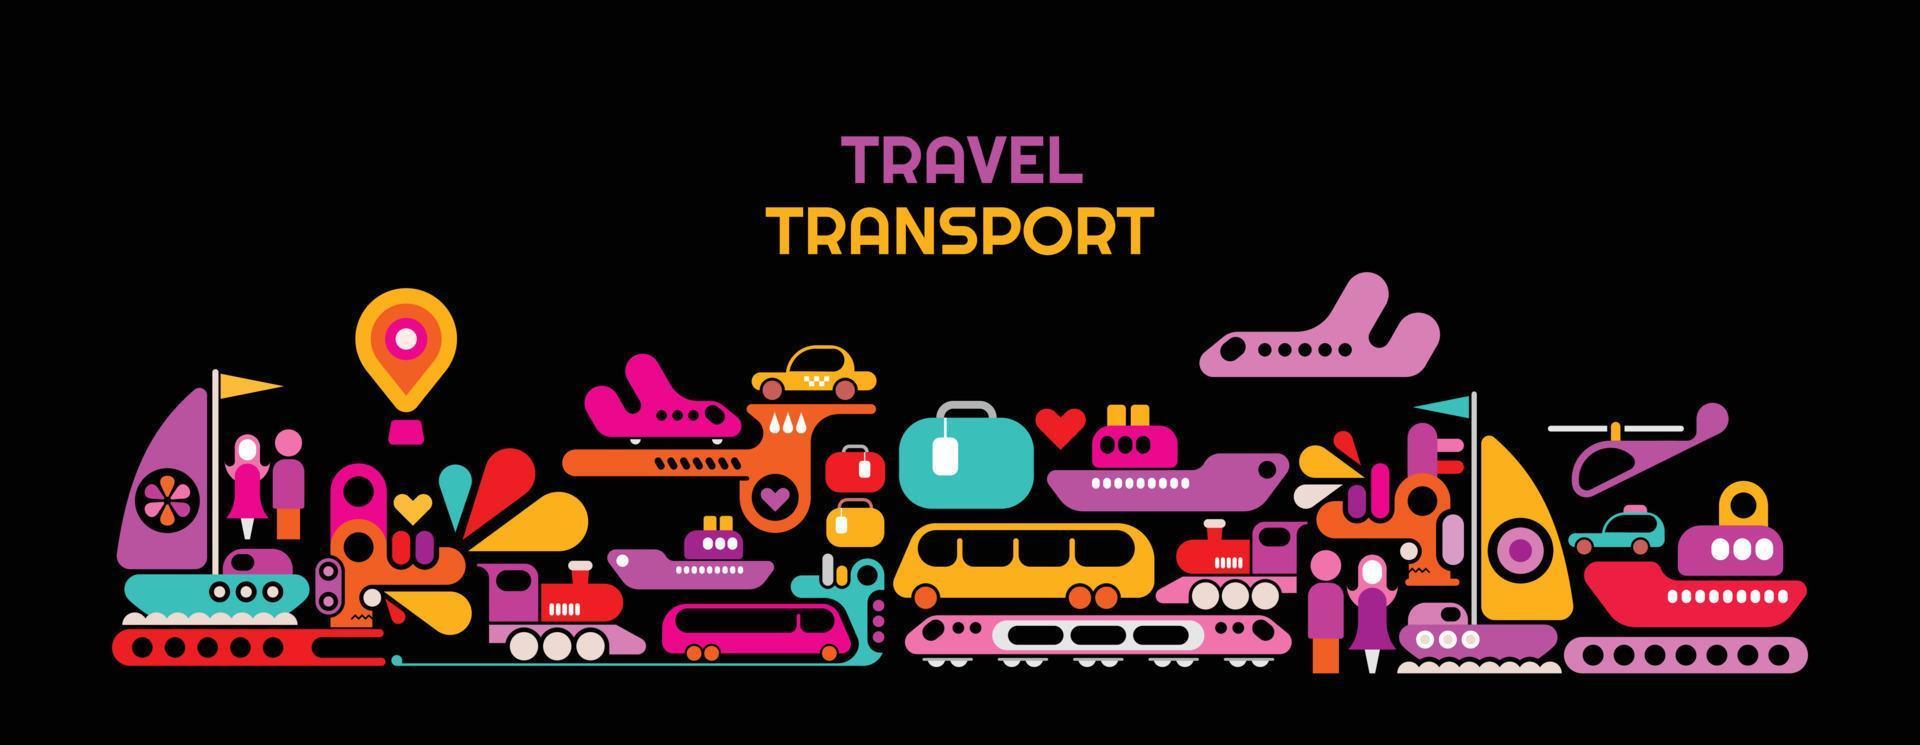 Travel and Transport vector illustration